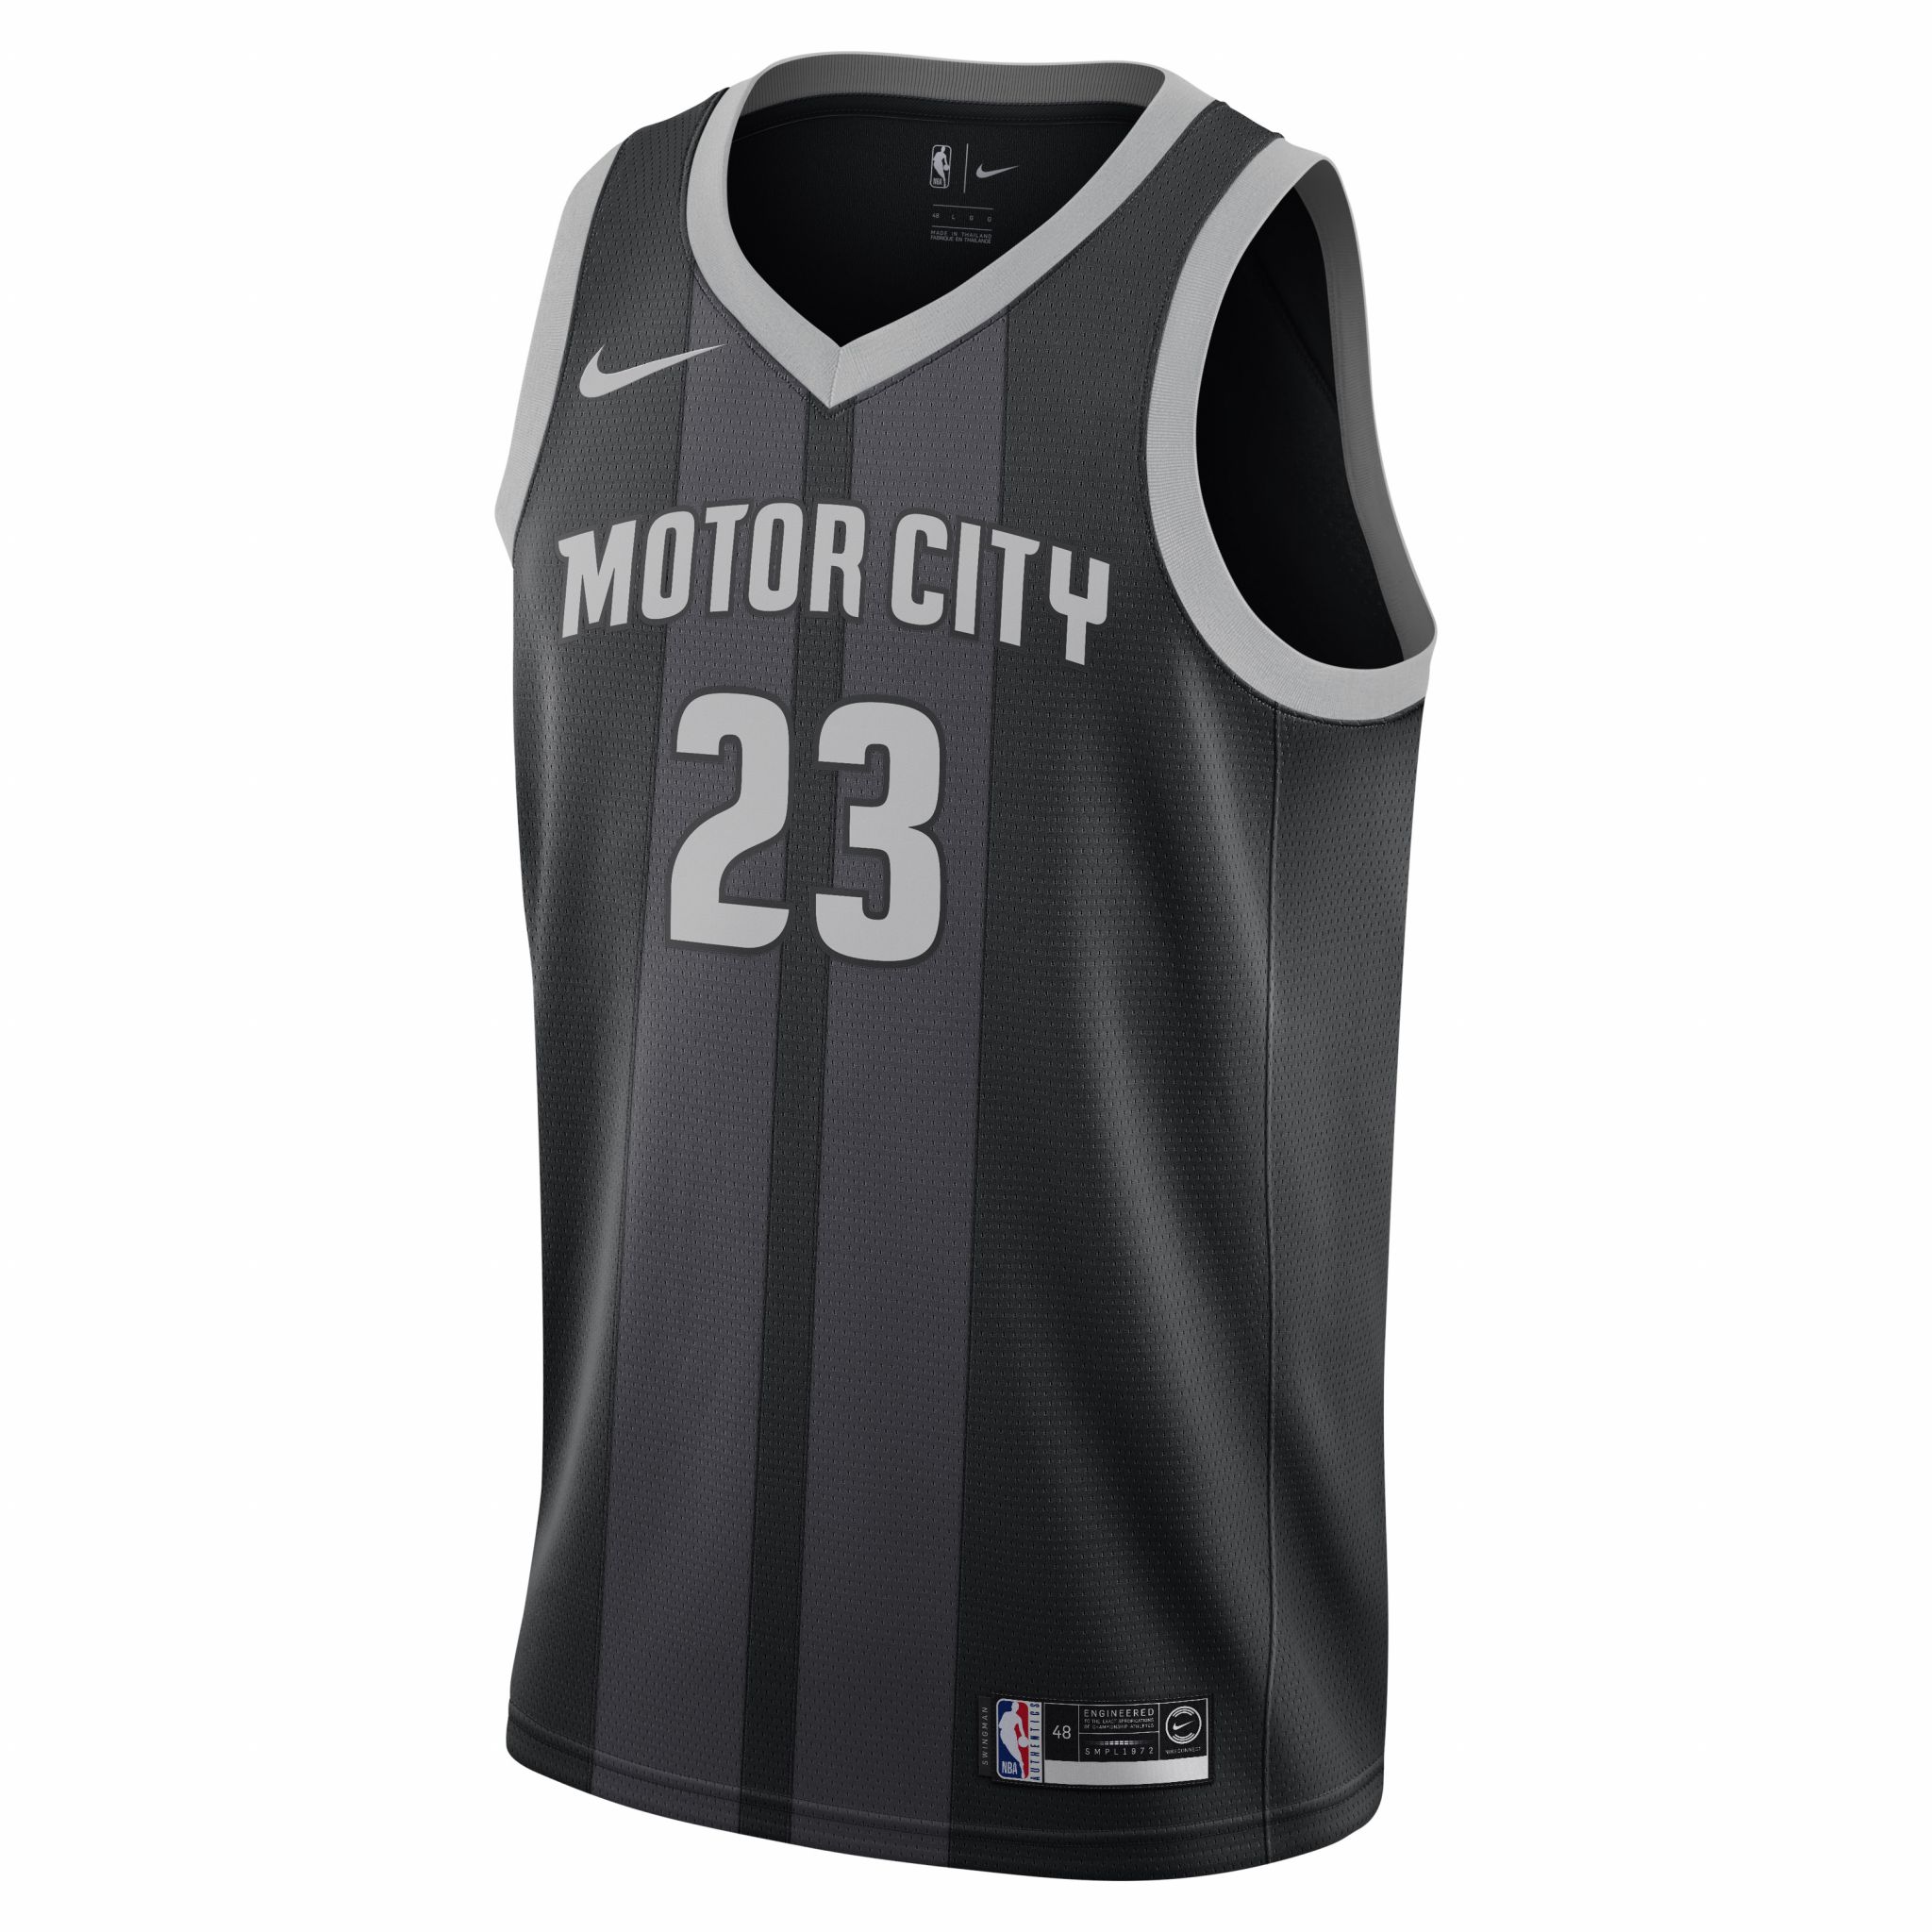 NBA City Edition Uniforms 2019-20 – SportsLogos.Net News